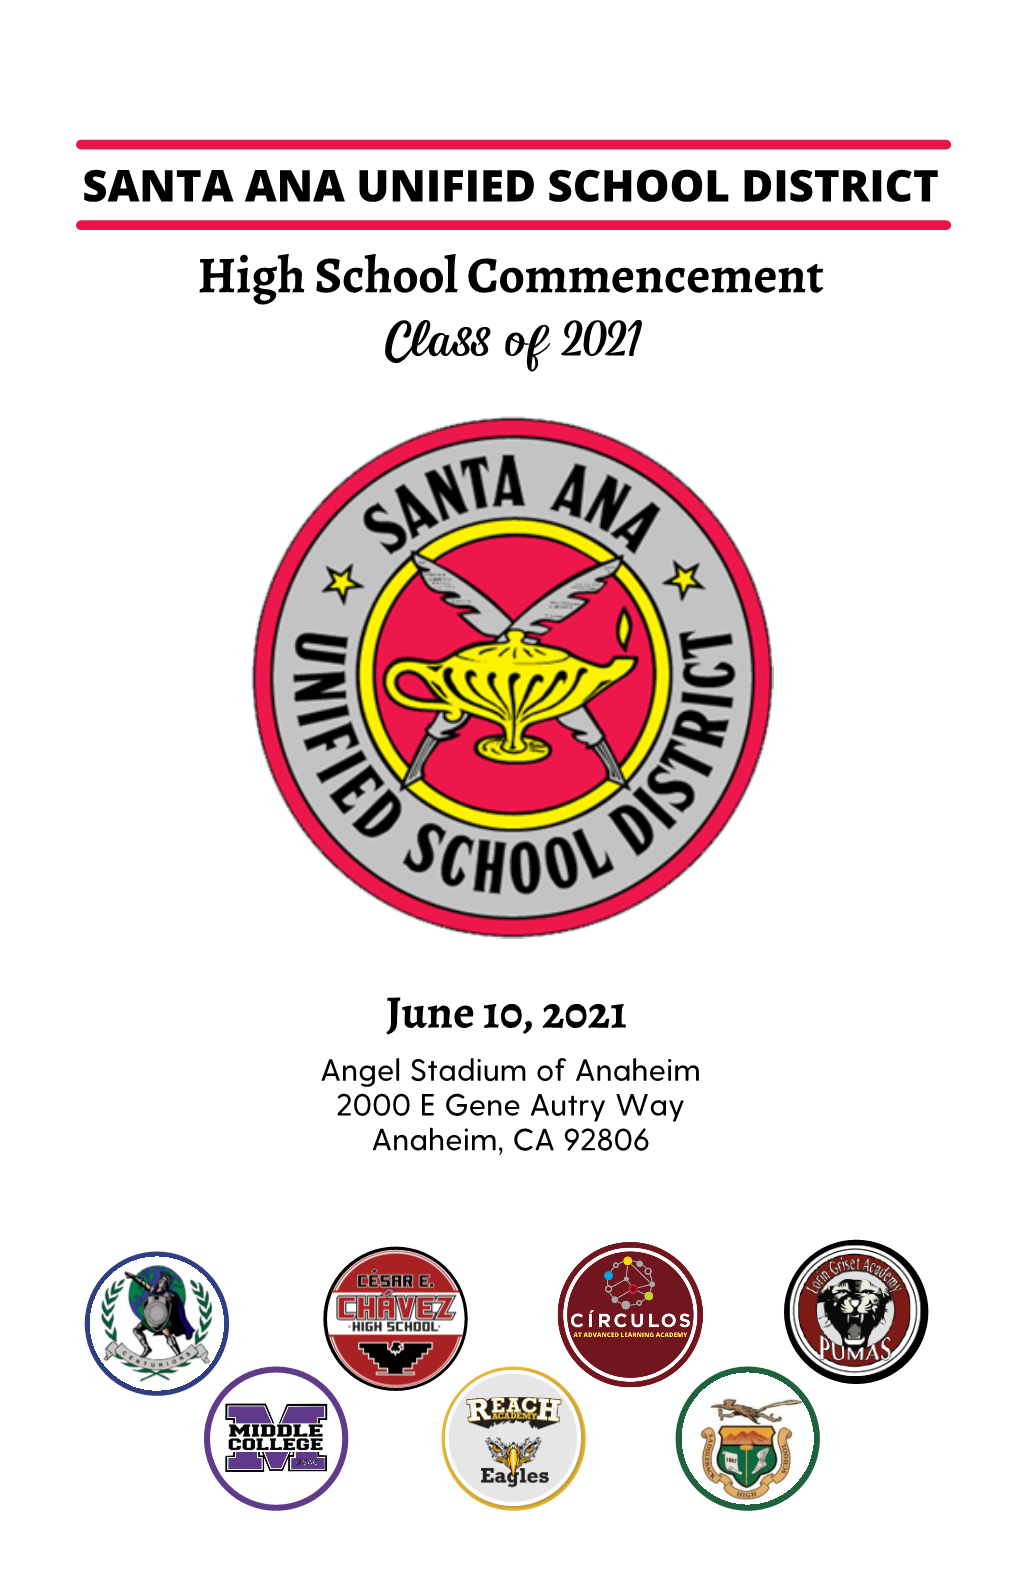 High School Commencement Class of 2021